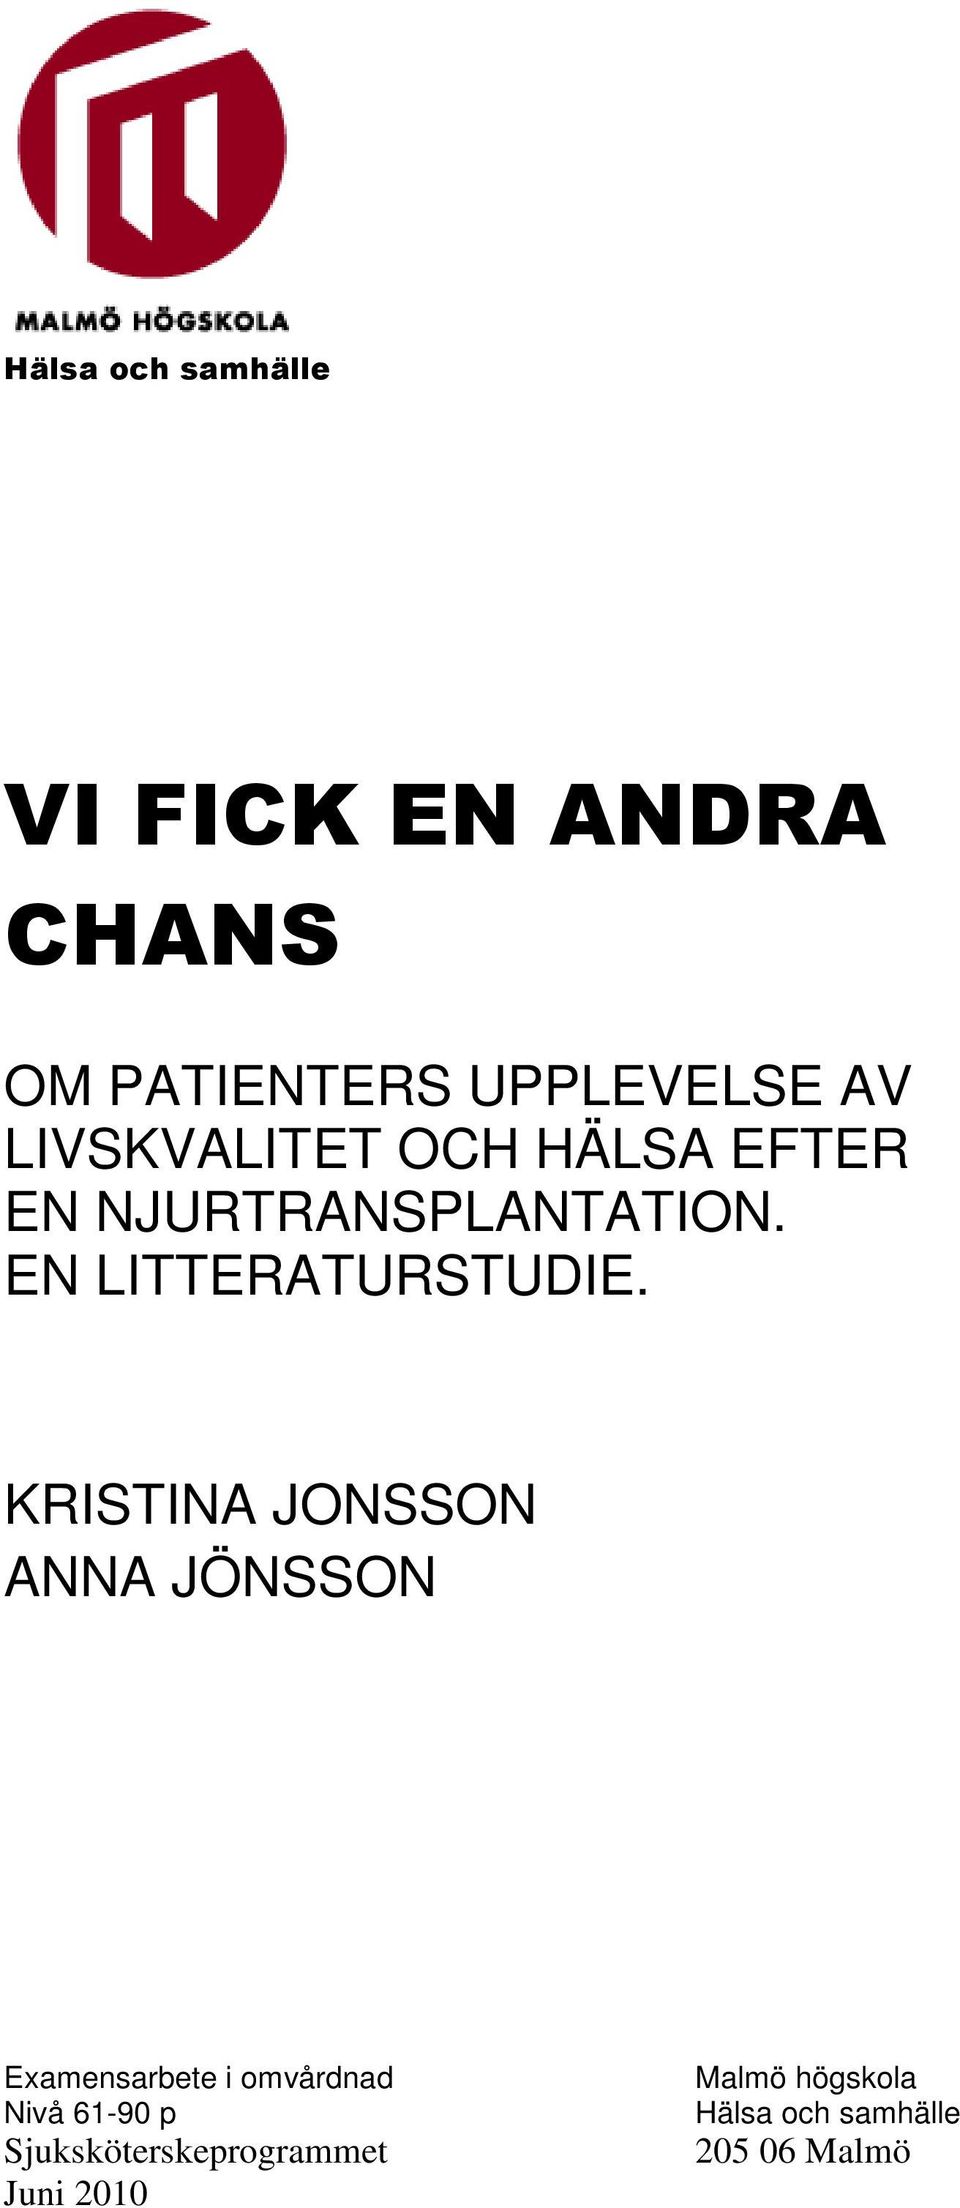 KRISTINA JONSSON ANNA JÖNSSON Examensarbete i omvårdnad Nivå 61-90 p